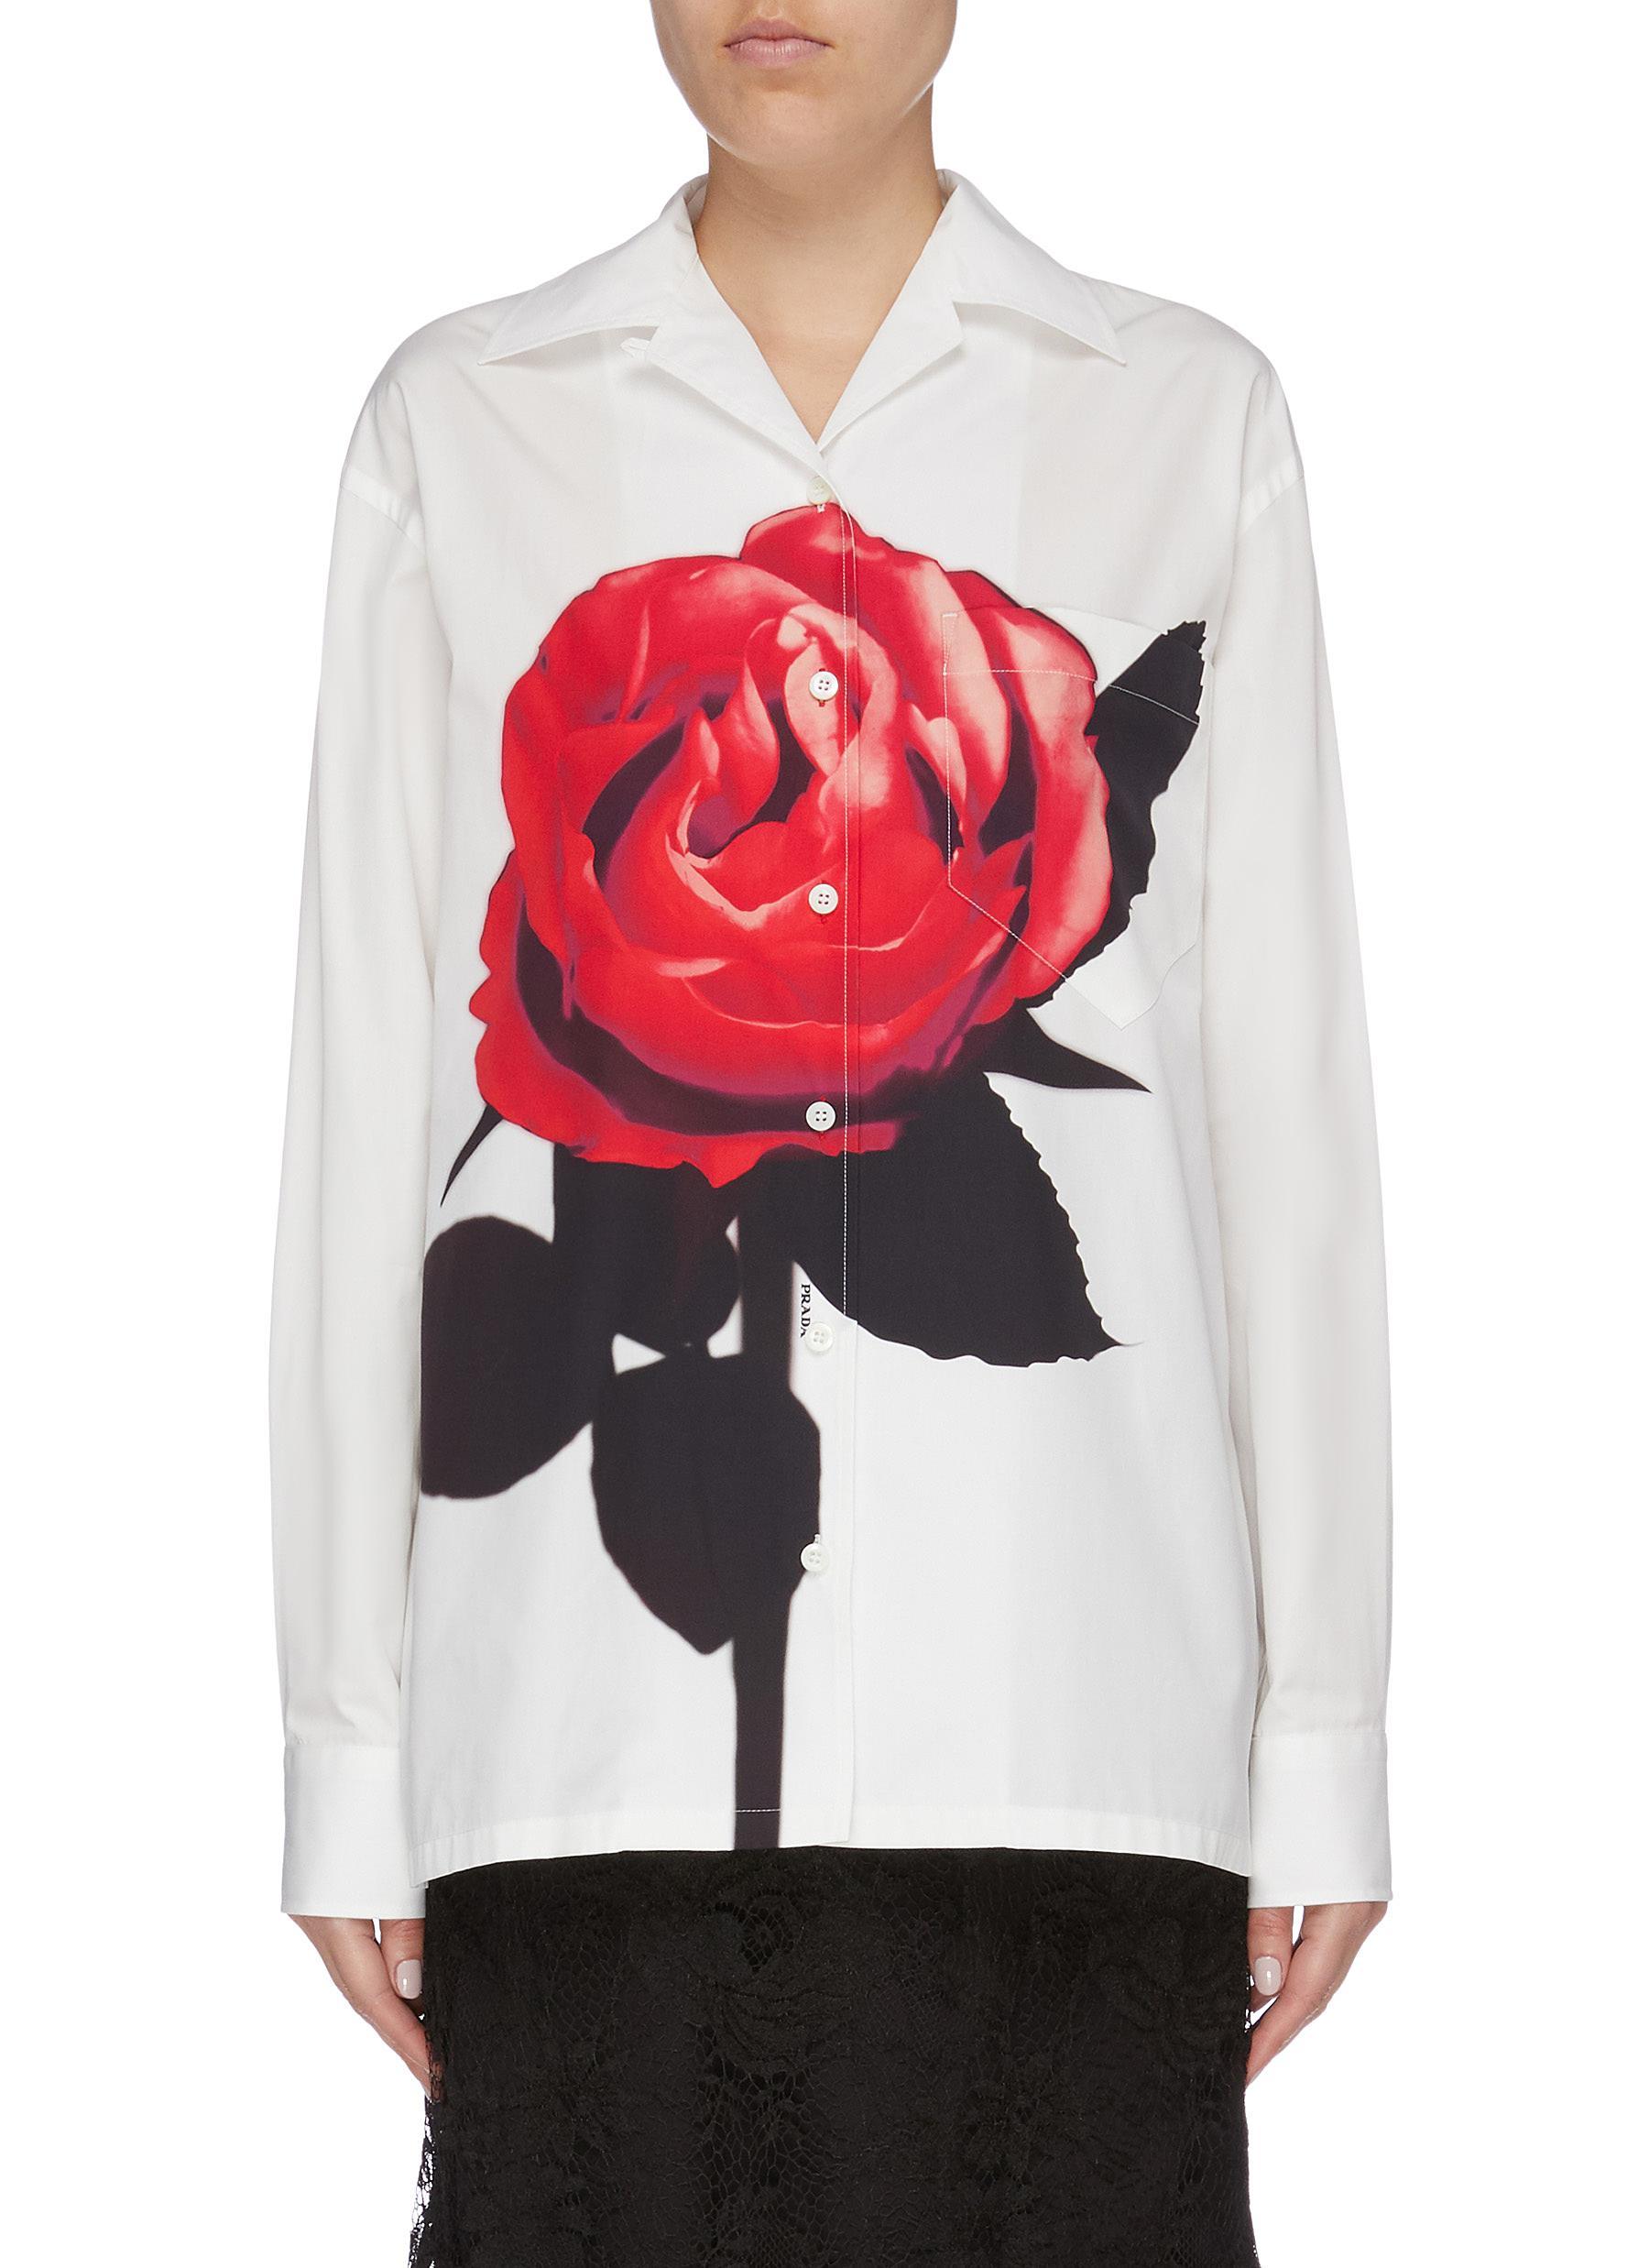 Prada Rose Print Shirt in White Red (White) - Lyst